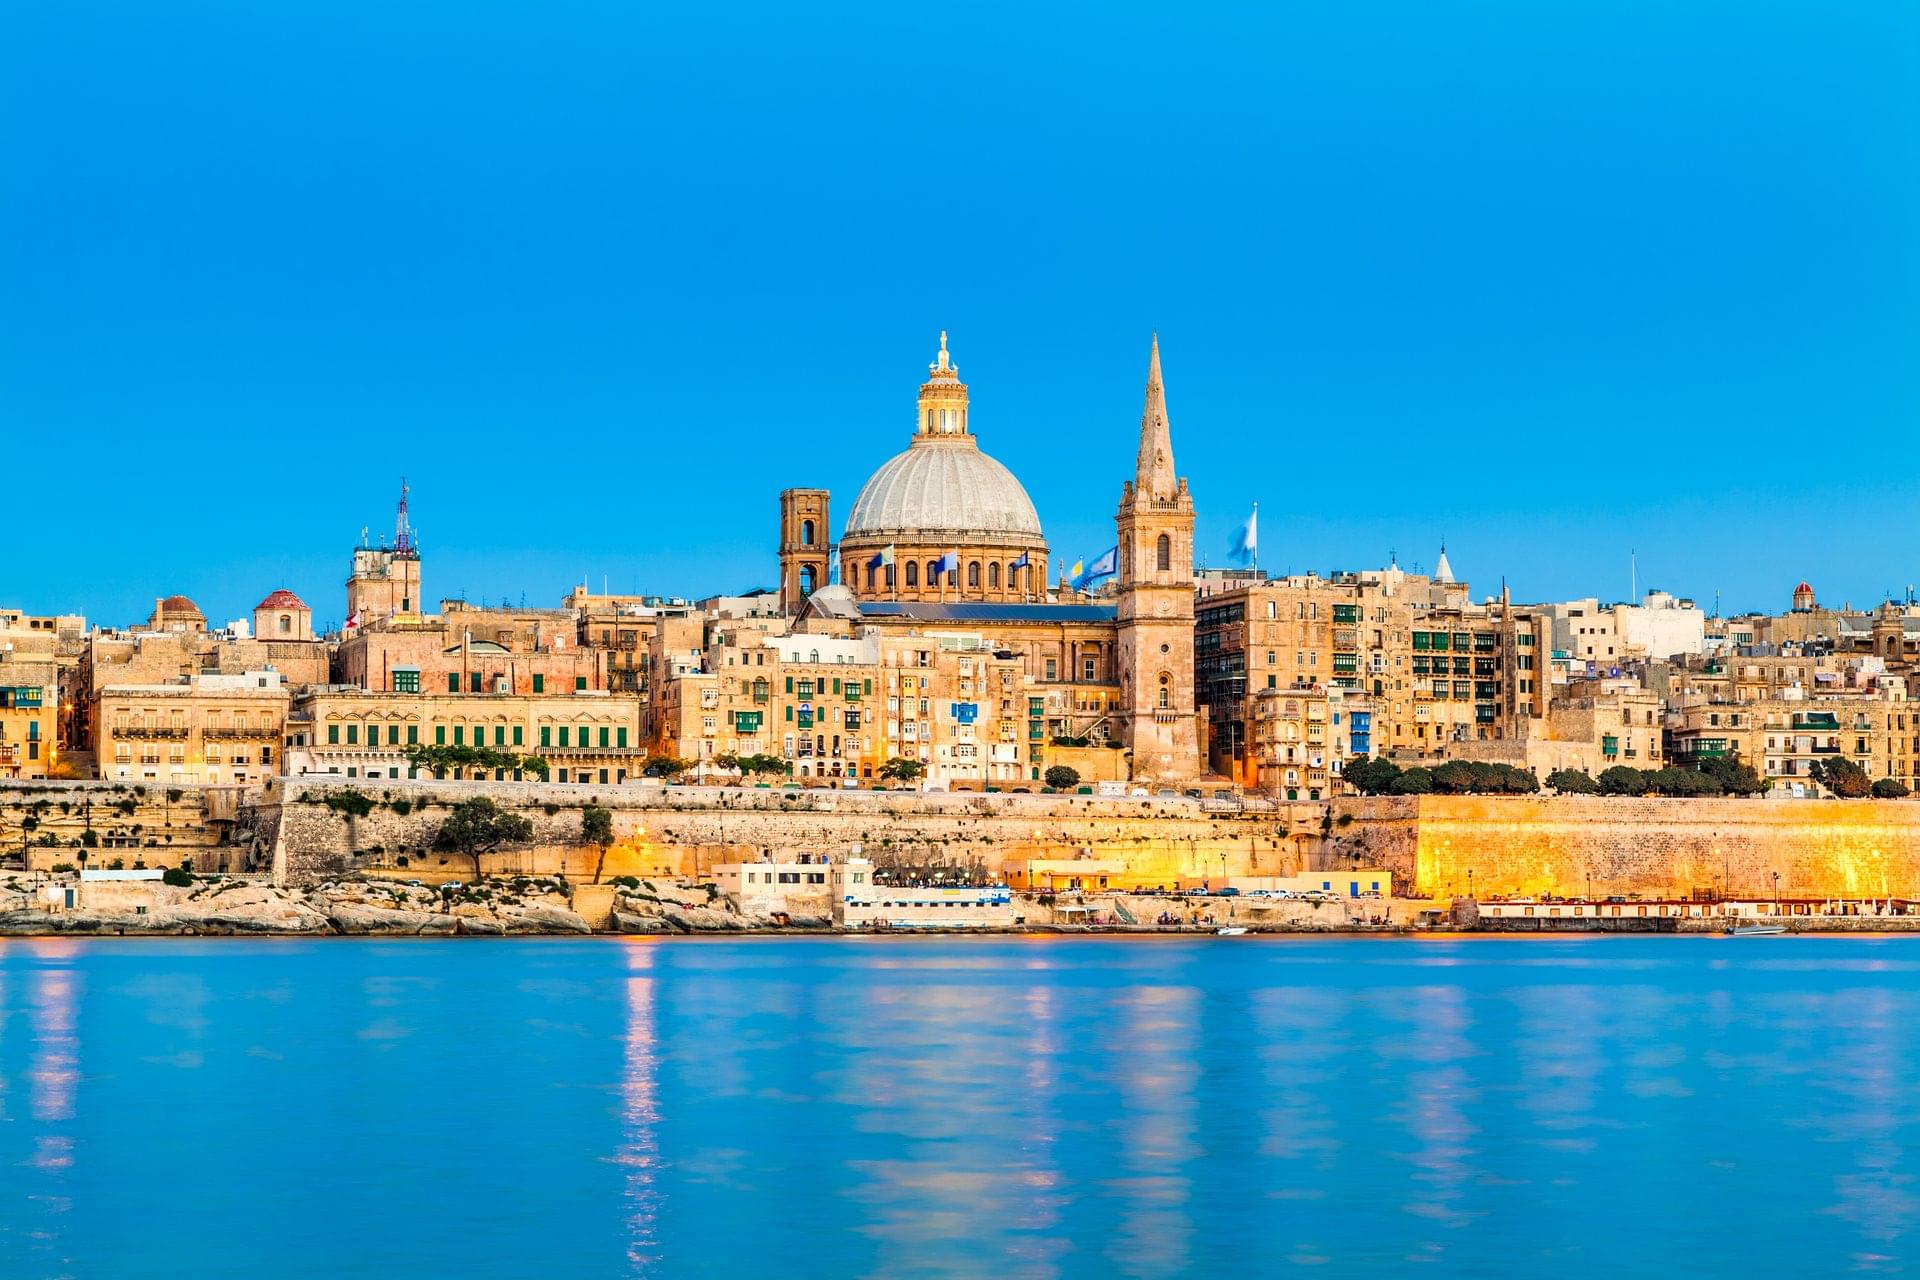 Destination: Malta